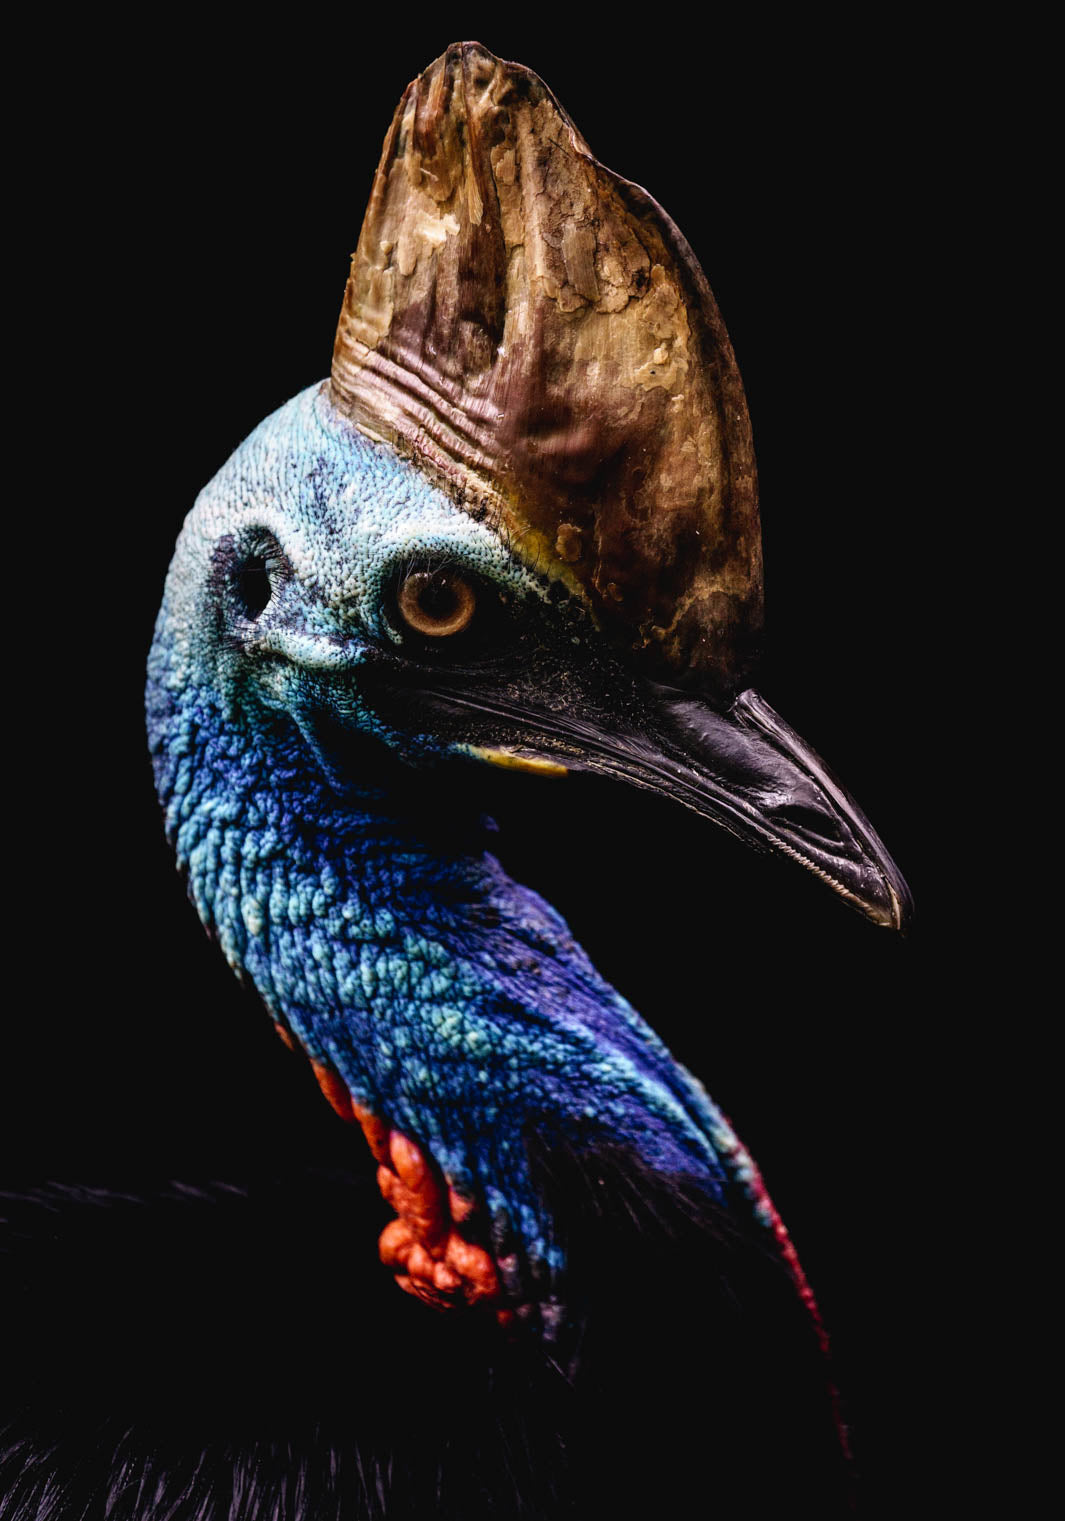 southern cassowary photographed in Port Douglas wildlife habitat